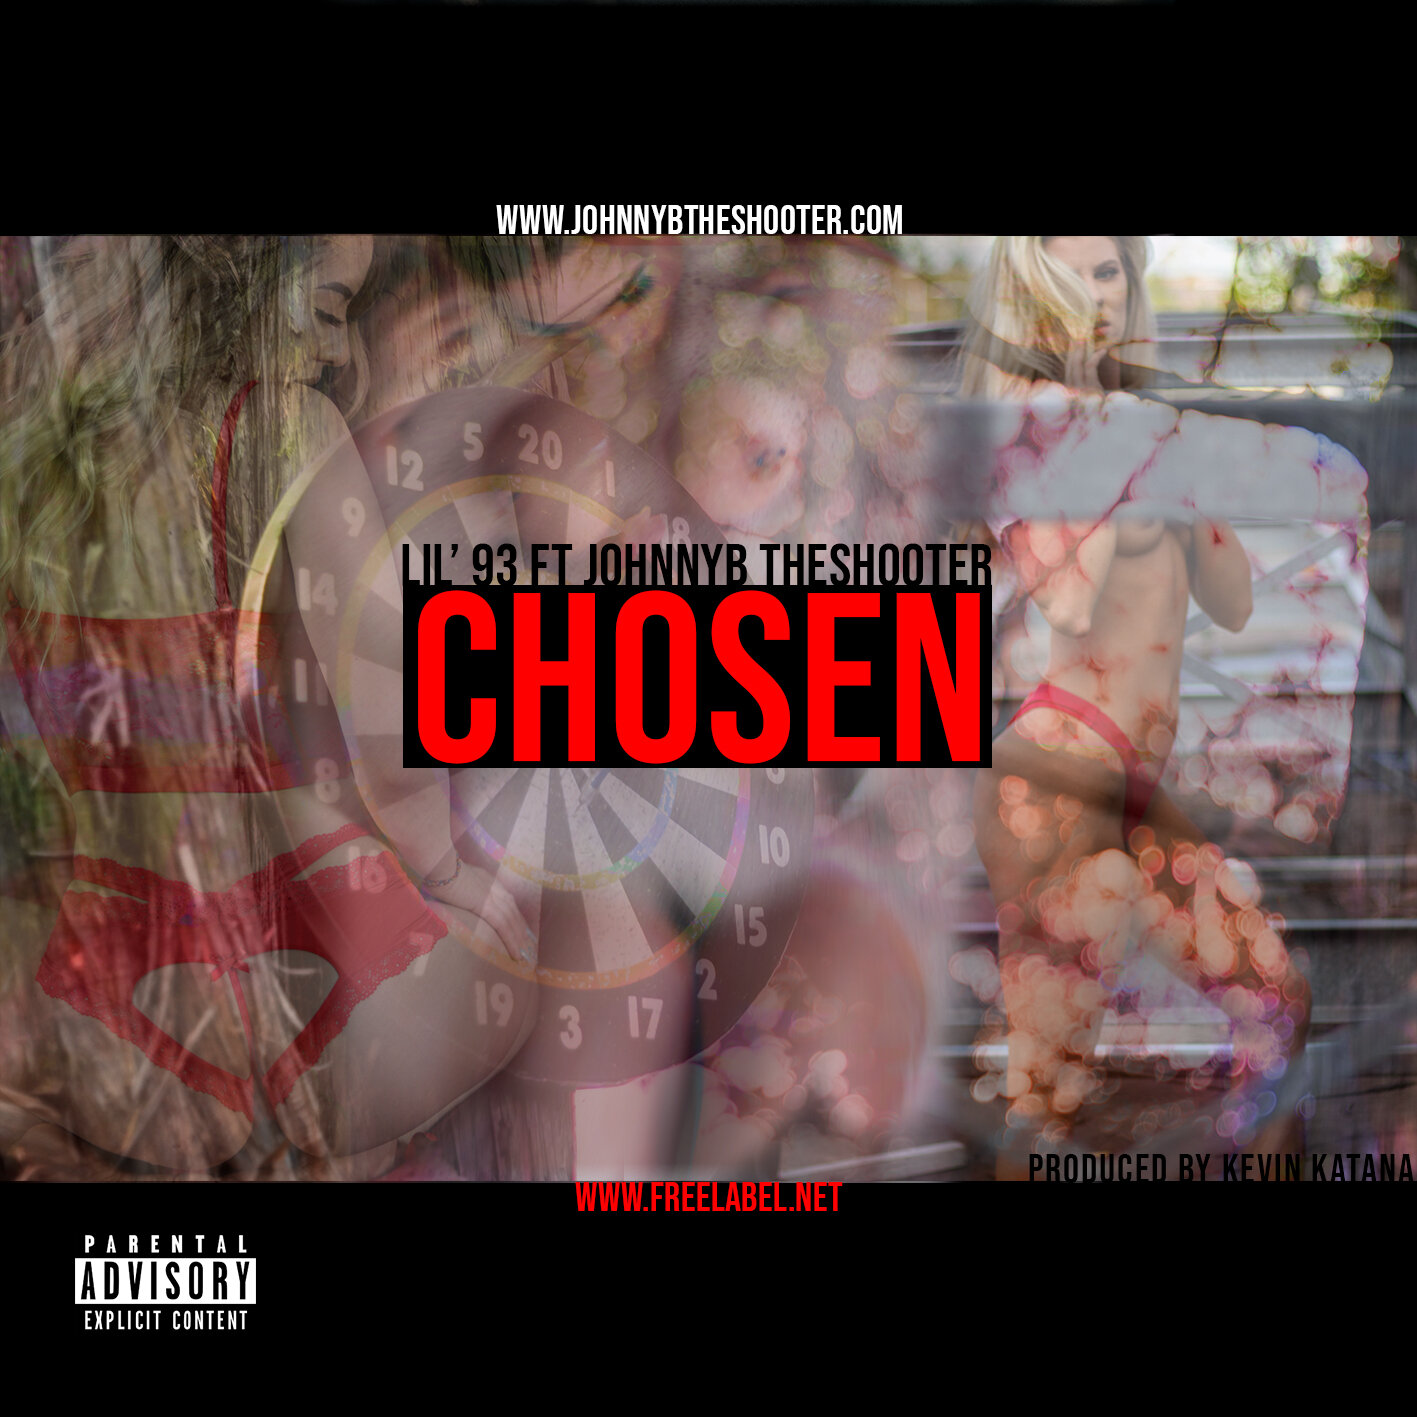 Chosen - Lil' 93 ft JohnnyB theShooter COVER.jpg